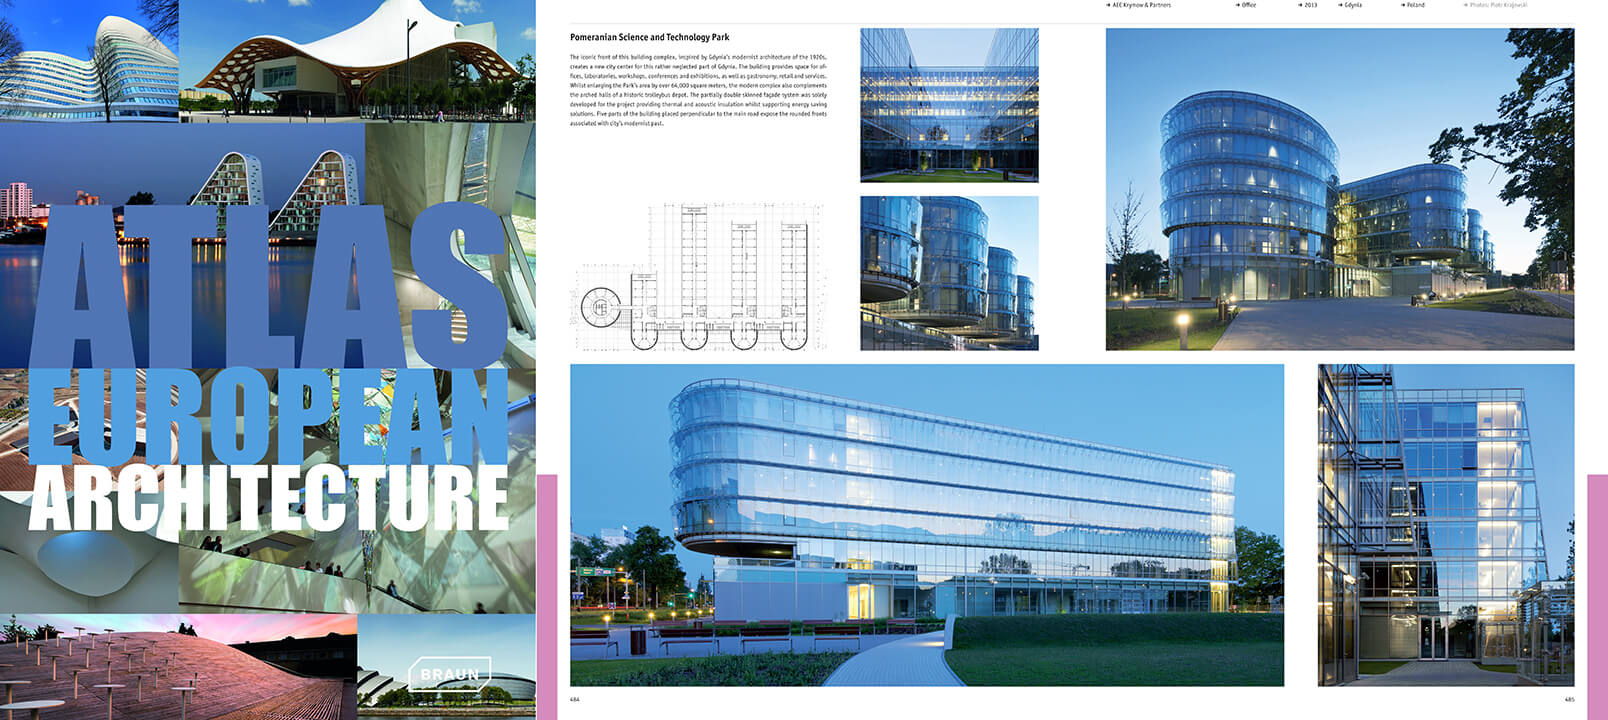 PPNT Gdynia - Atlas of European Architecture 2015